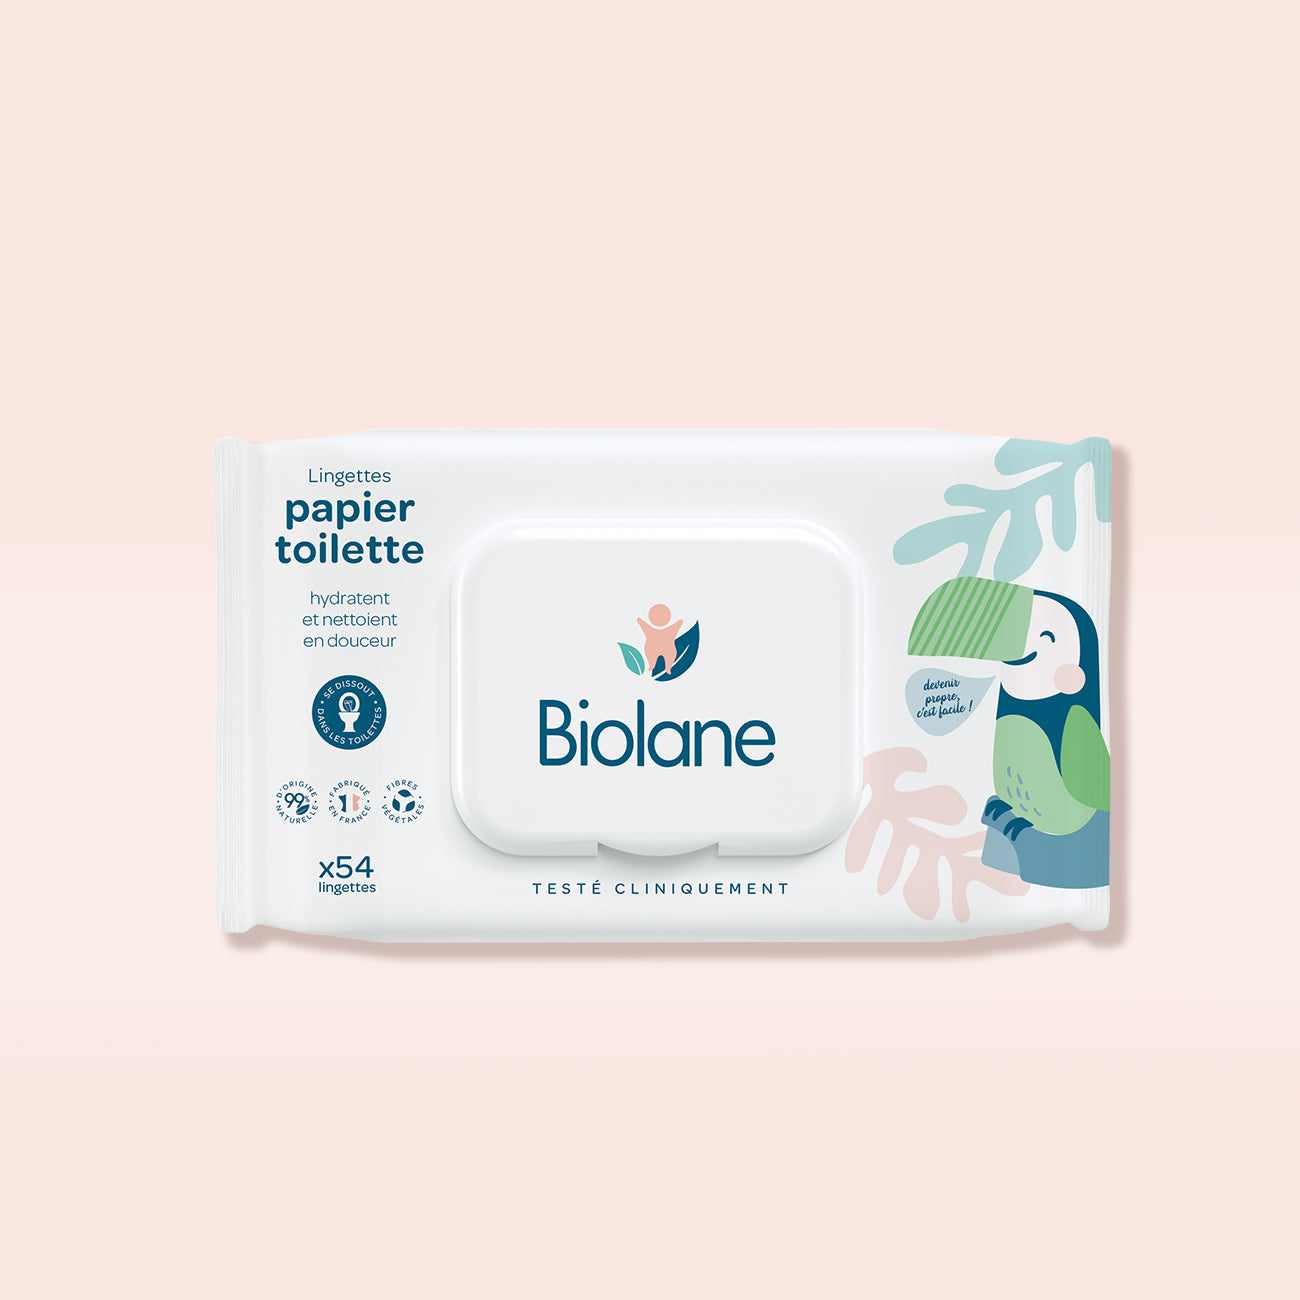 Lingette biolane - Biolane